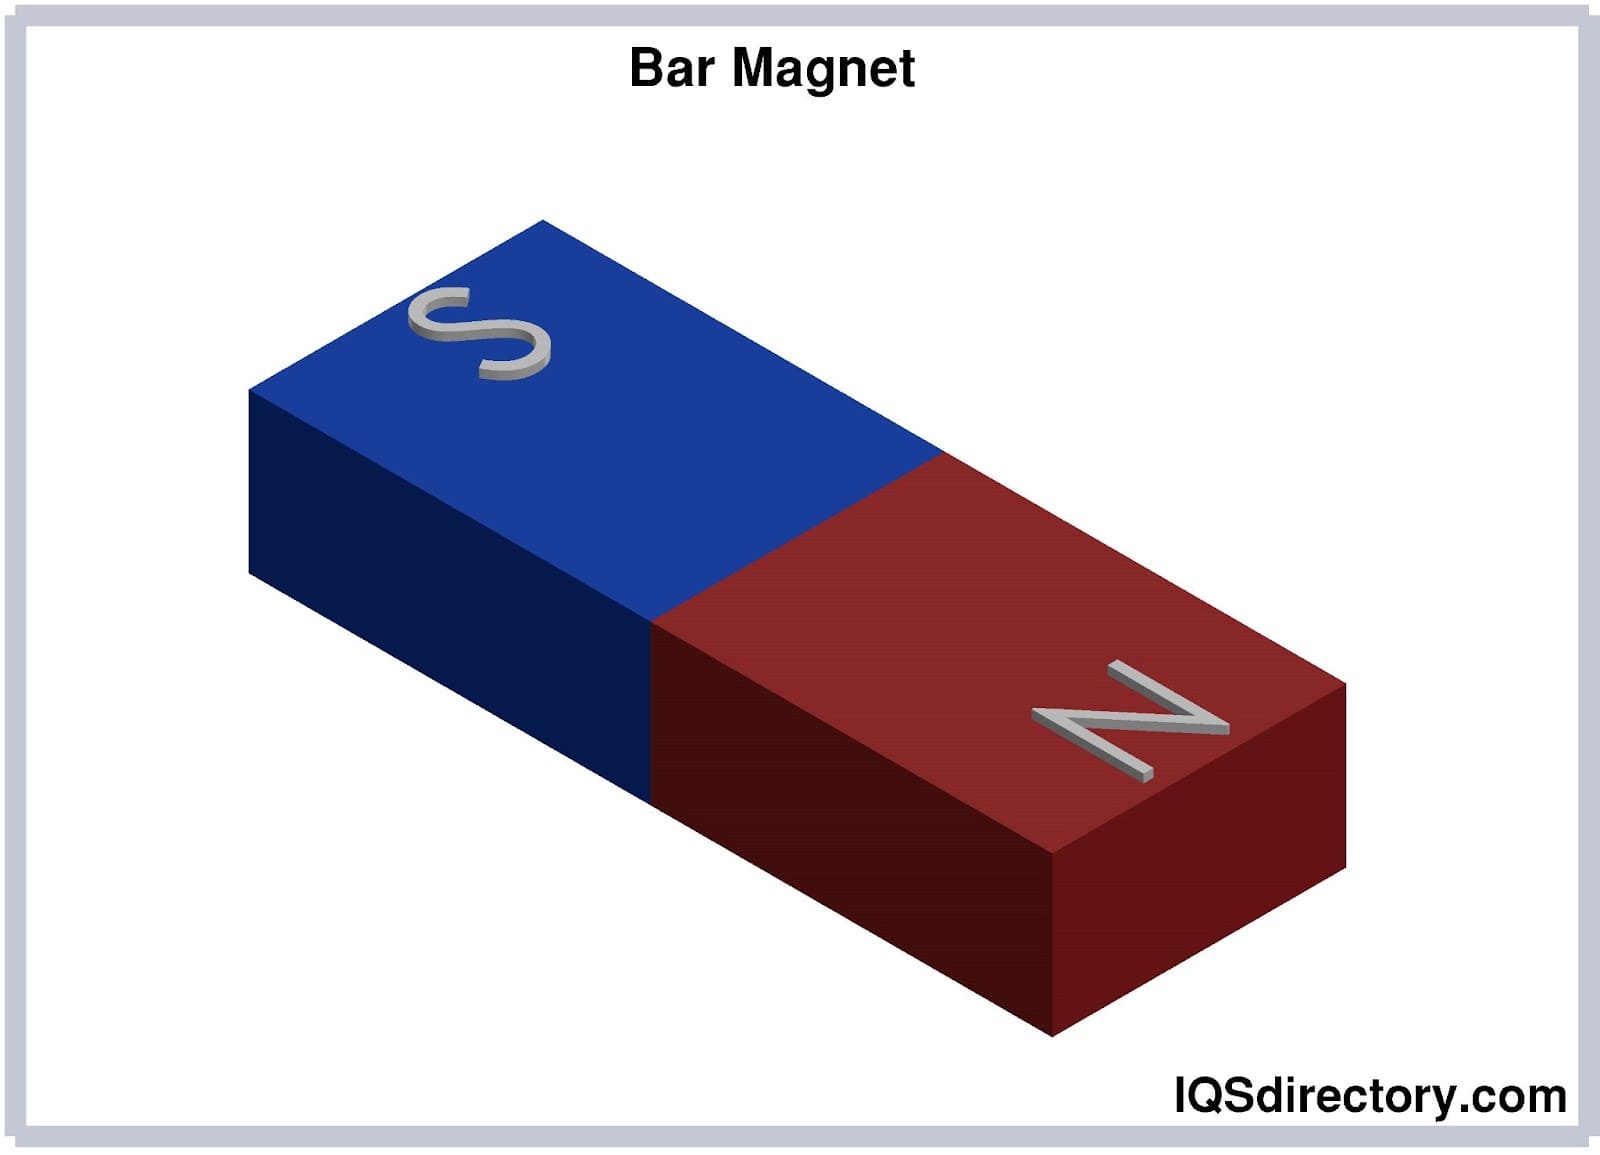 https://www.iqsdirectory.com/articles/magnet/bar-magnet.jpg